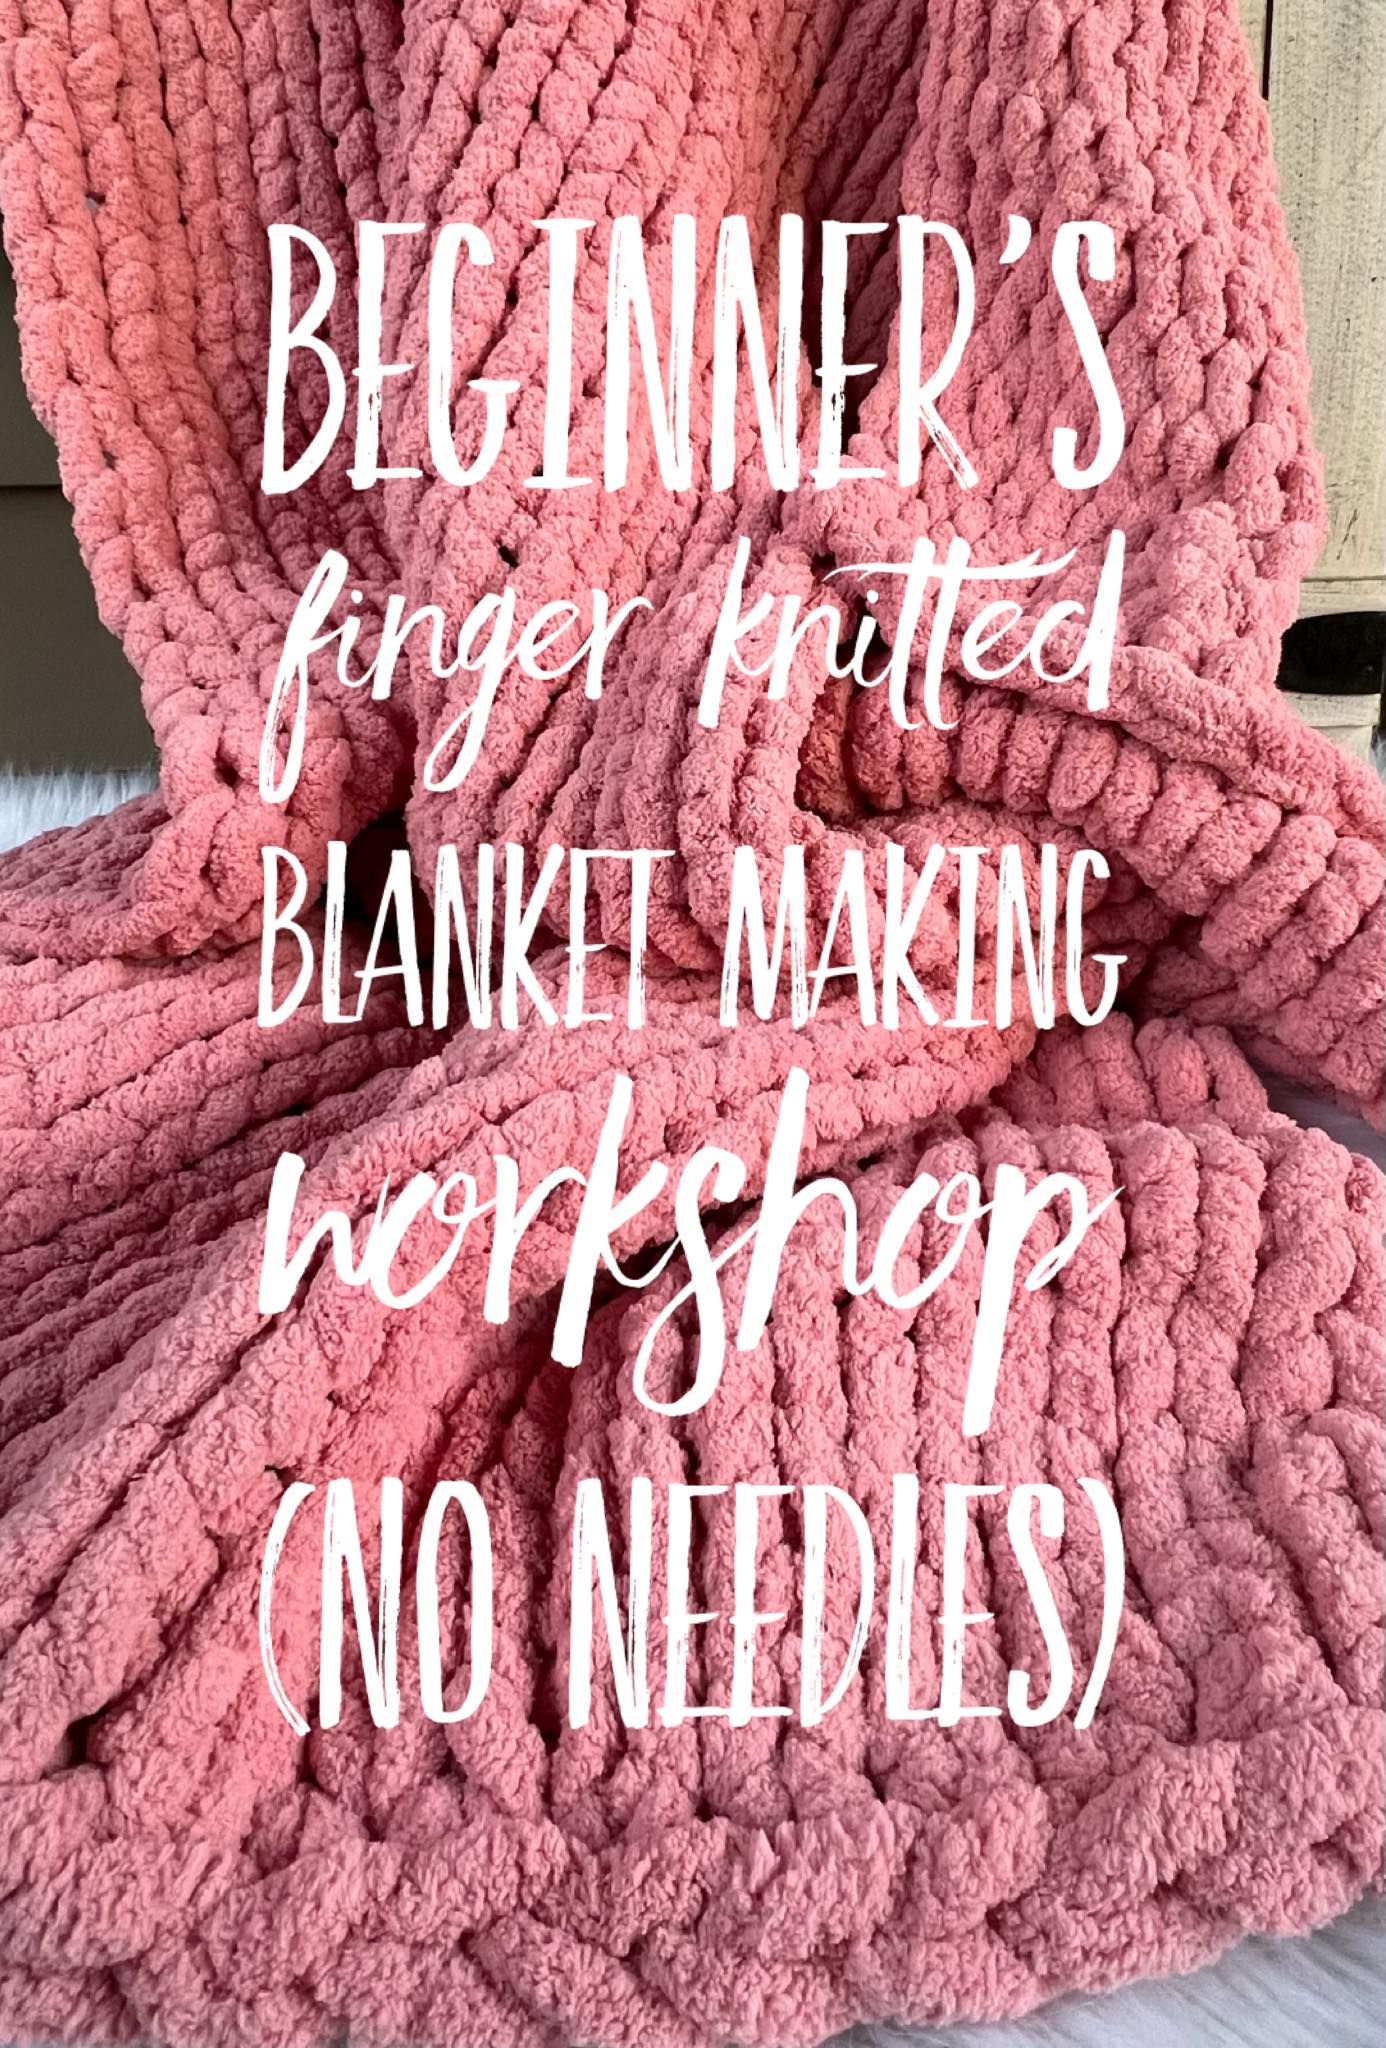 Color Block Finger Knitted Blanket - Yarn & Needle Arts - DIY